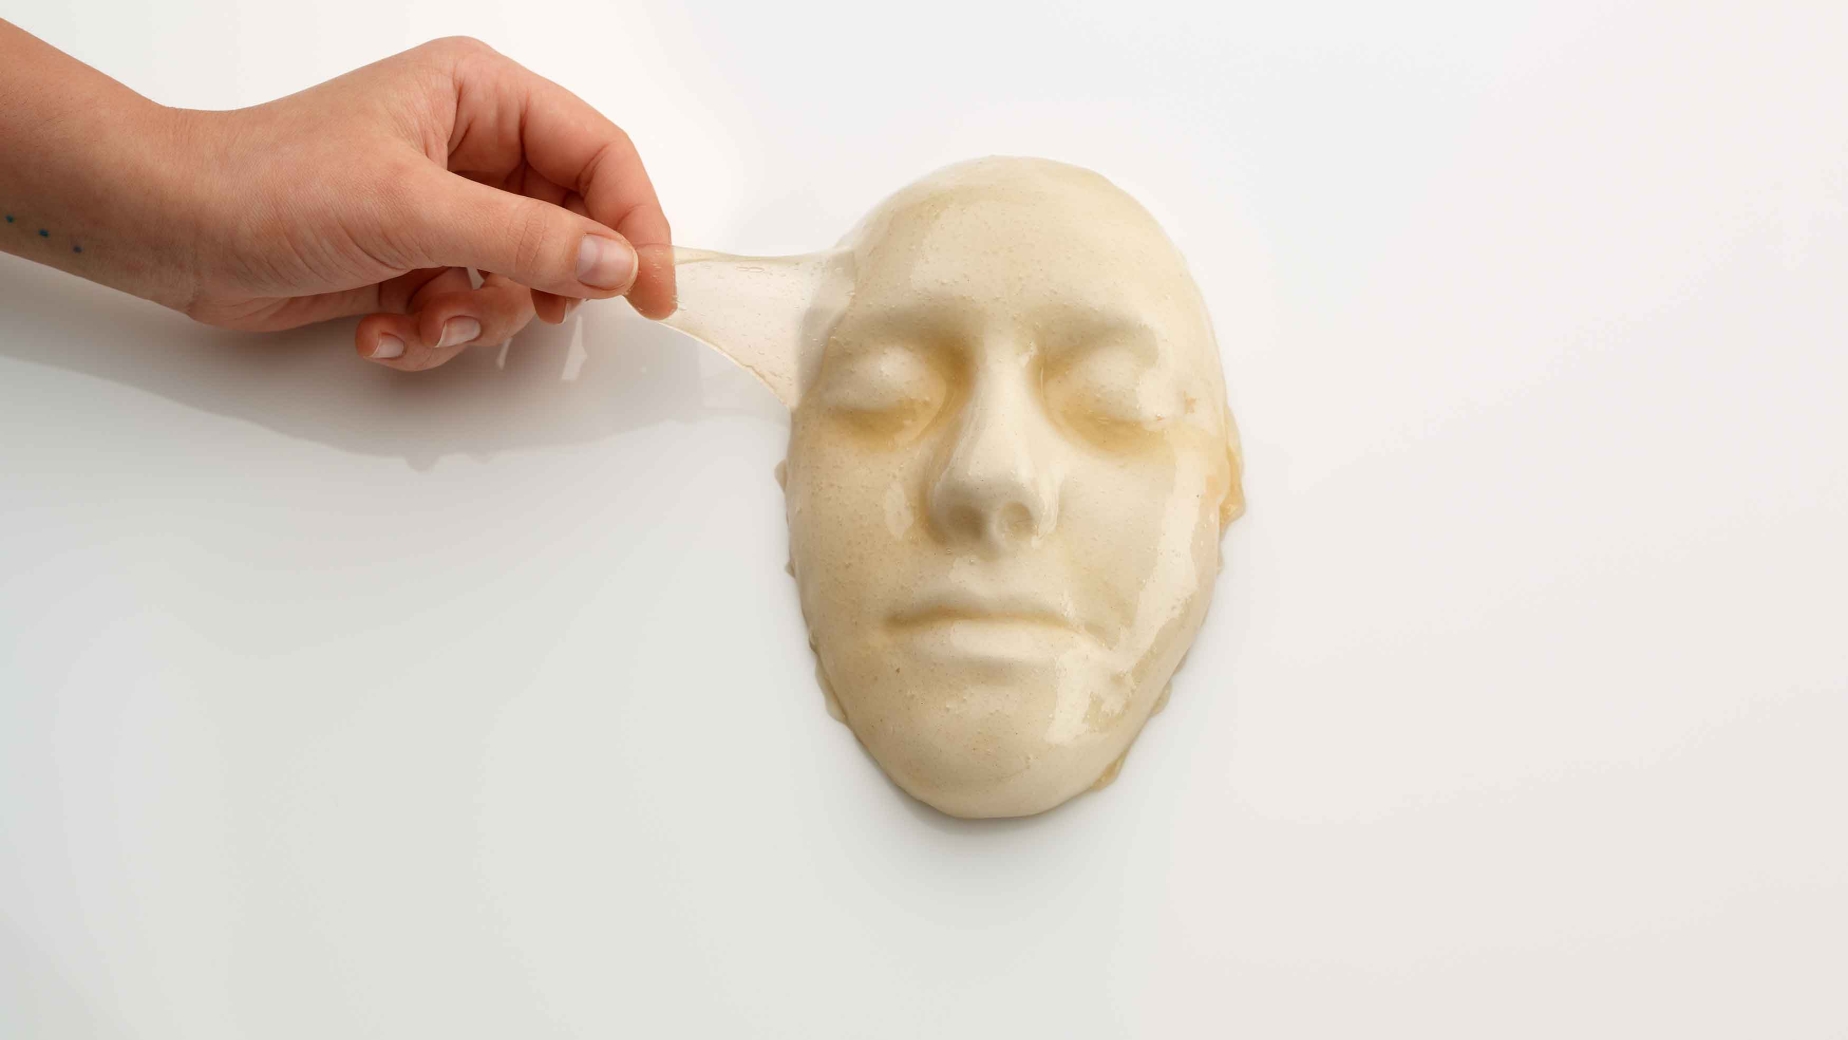 Face to face: the skin I live in
Photo: José Luis López de Zubiría